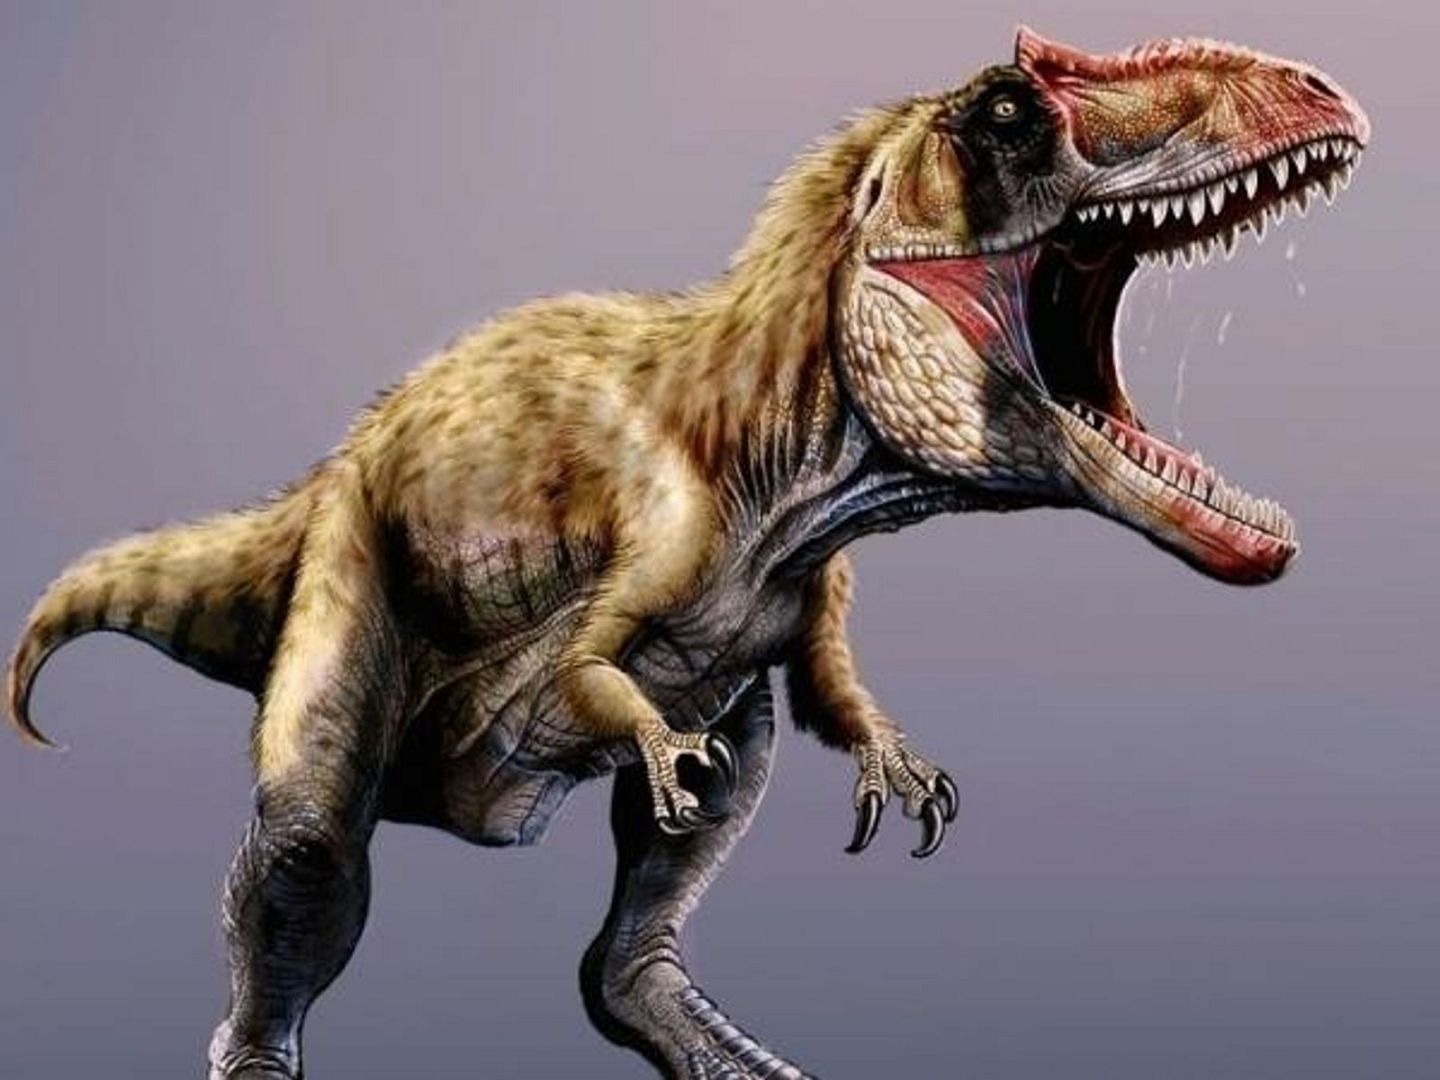 Cuáles son las Características de un Dinosaurio?